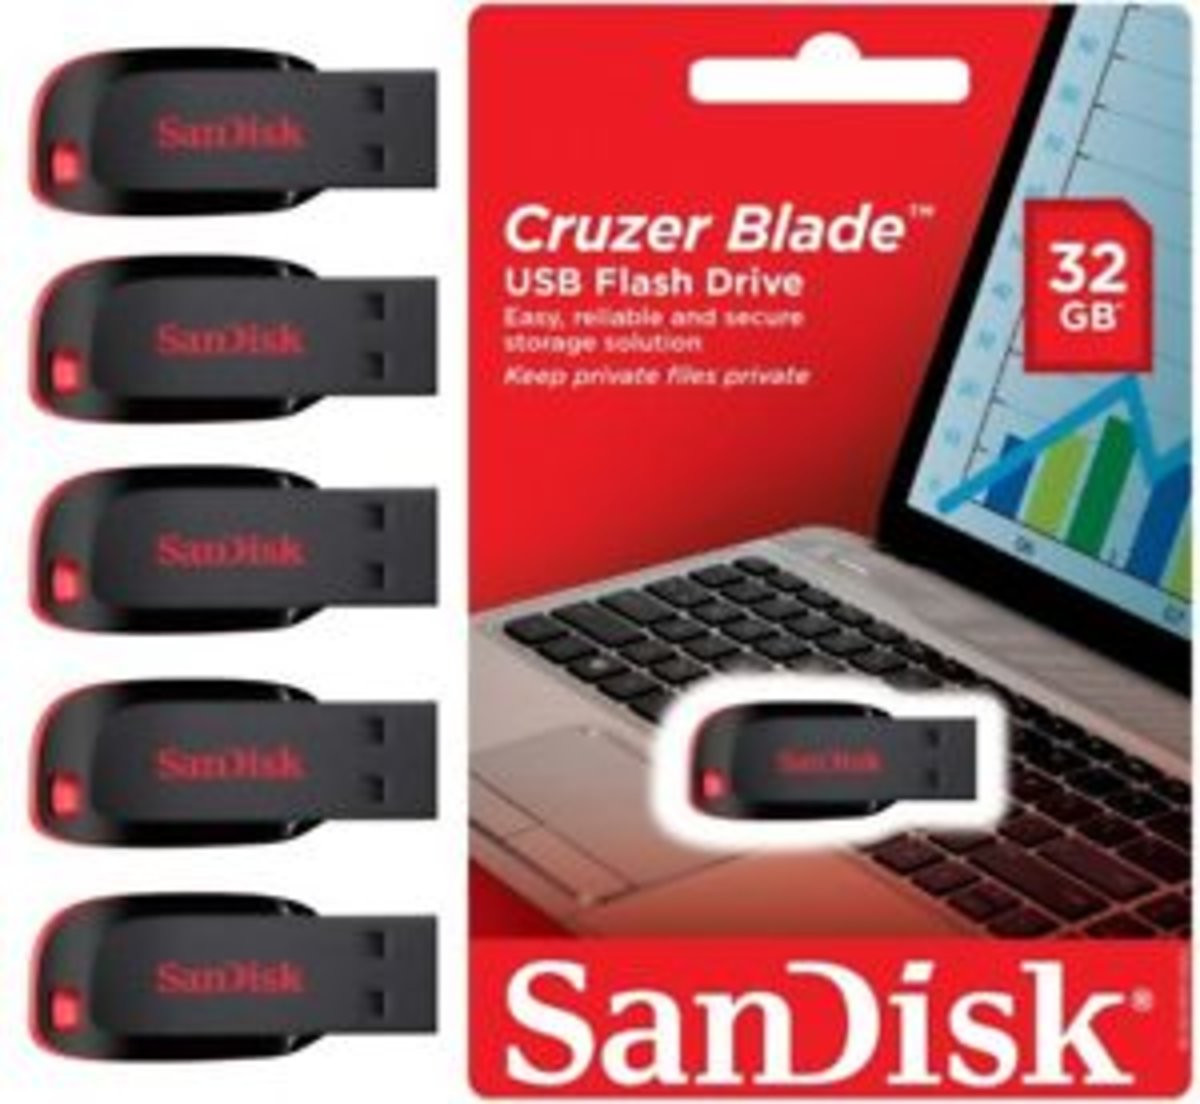 Flash SanDisk USB 2.0 Cruzer Blade 32Gb Black/Red - 4